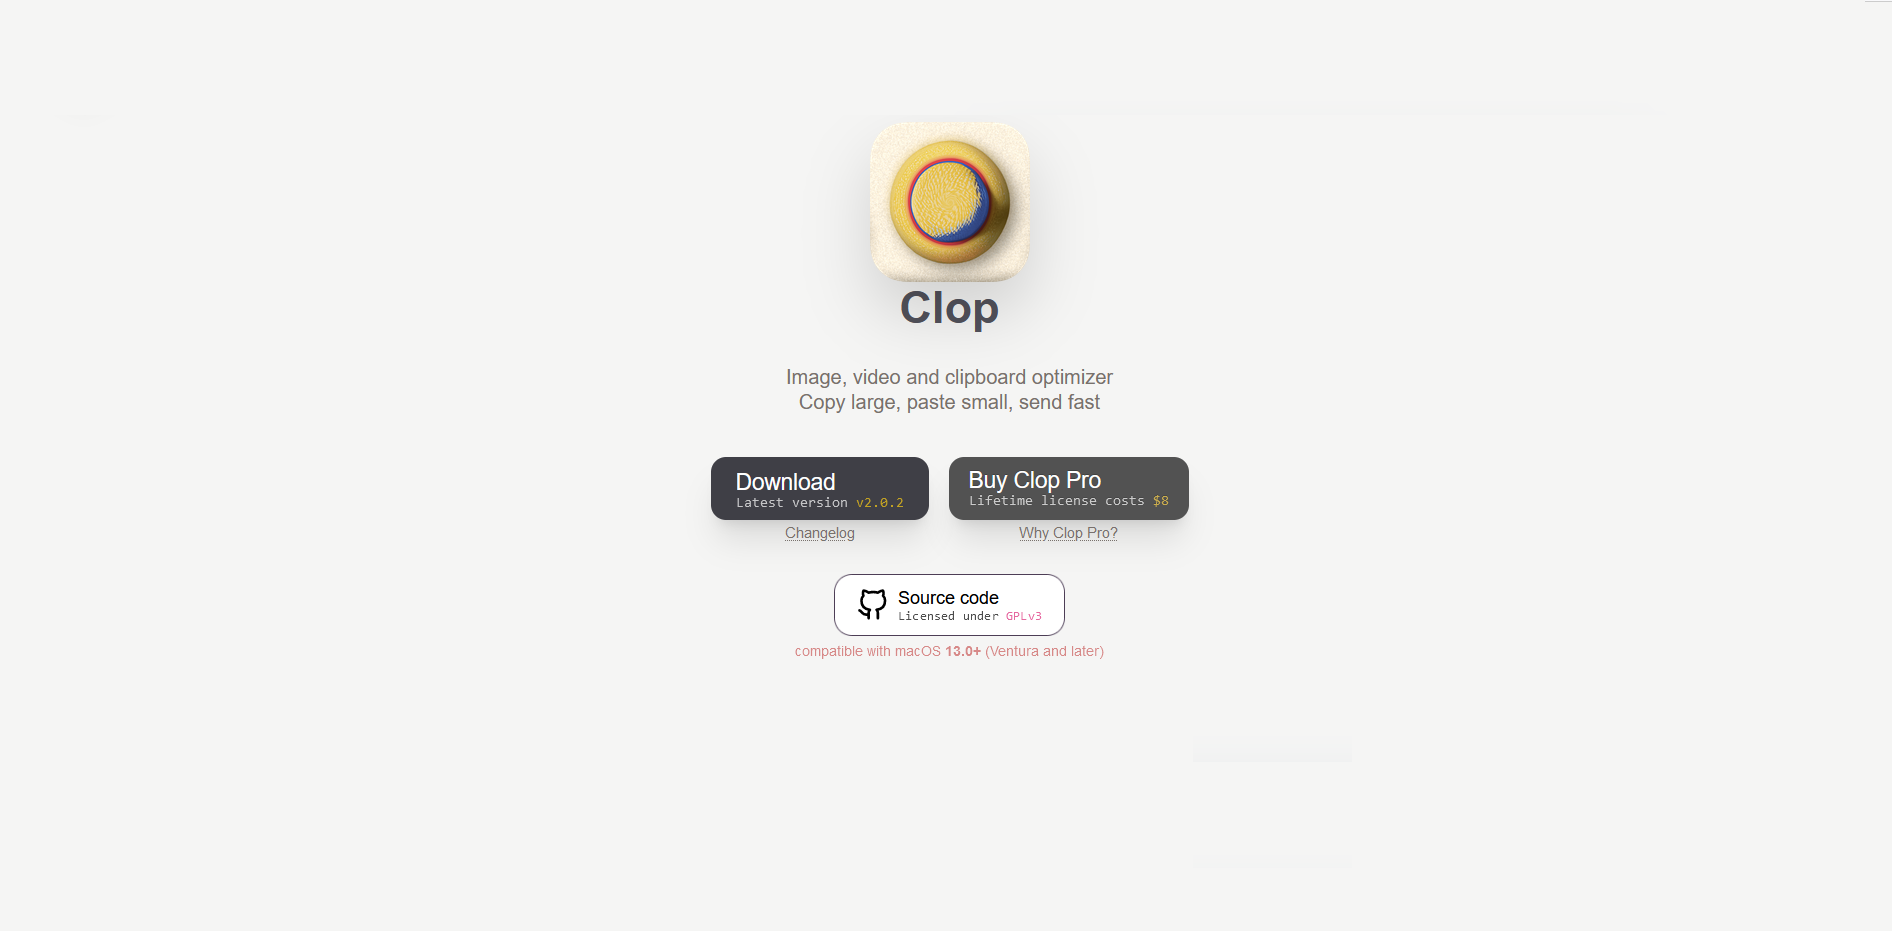 Clop 2.0 – автоматический конвертер для оптимизации графики и видео на Mac